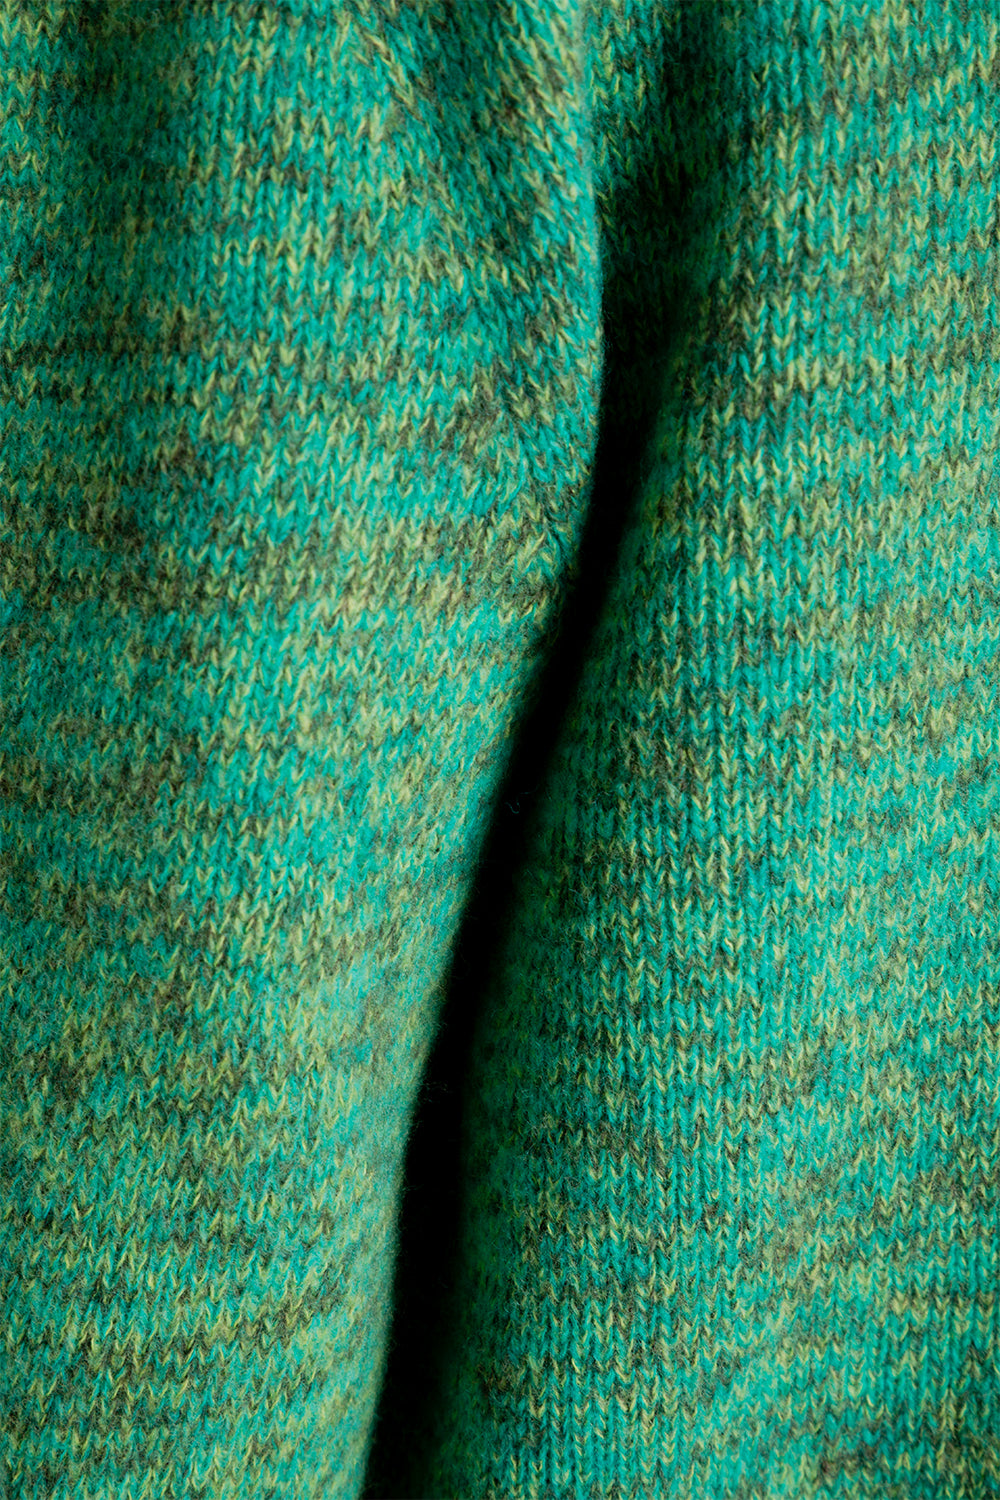 Schnayderman's Funnel Neck Sweater in Green Multi